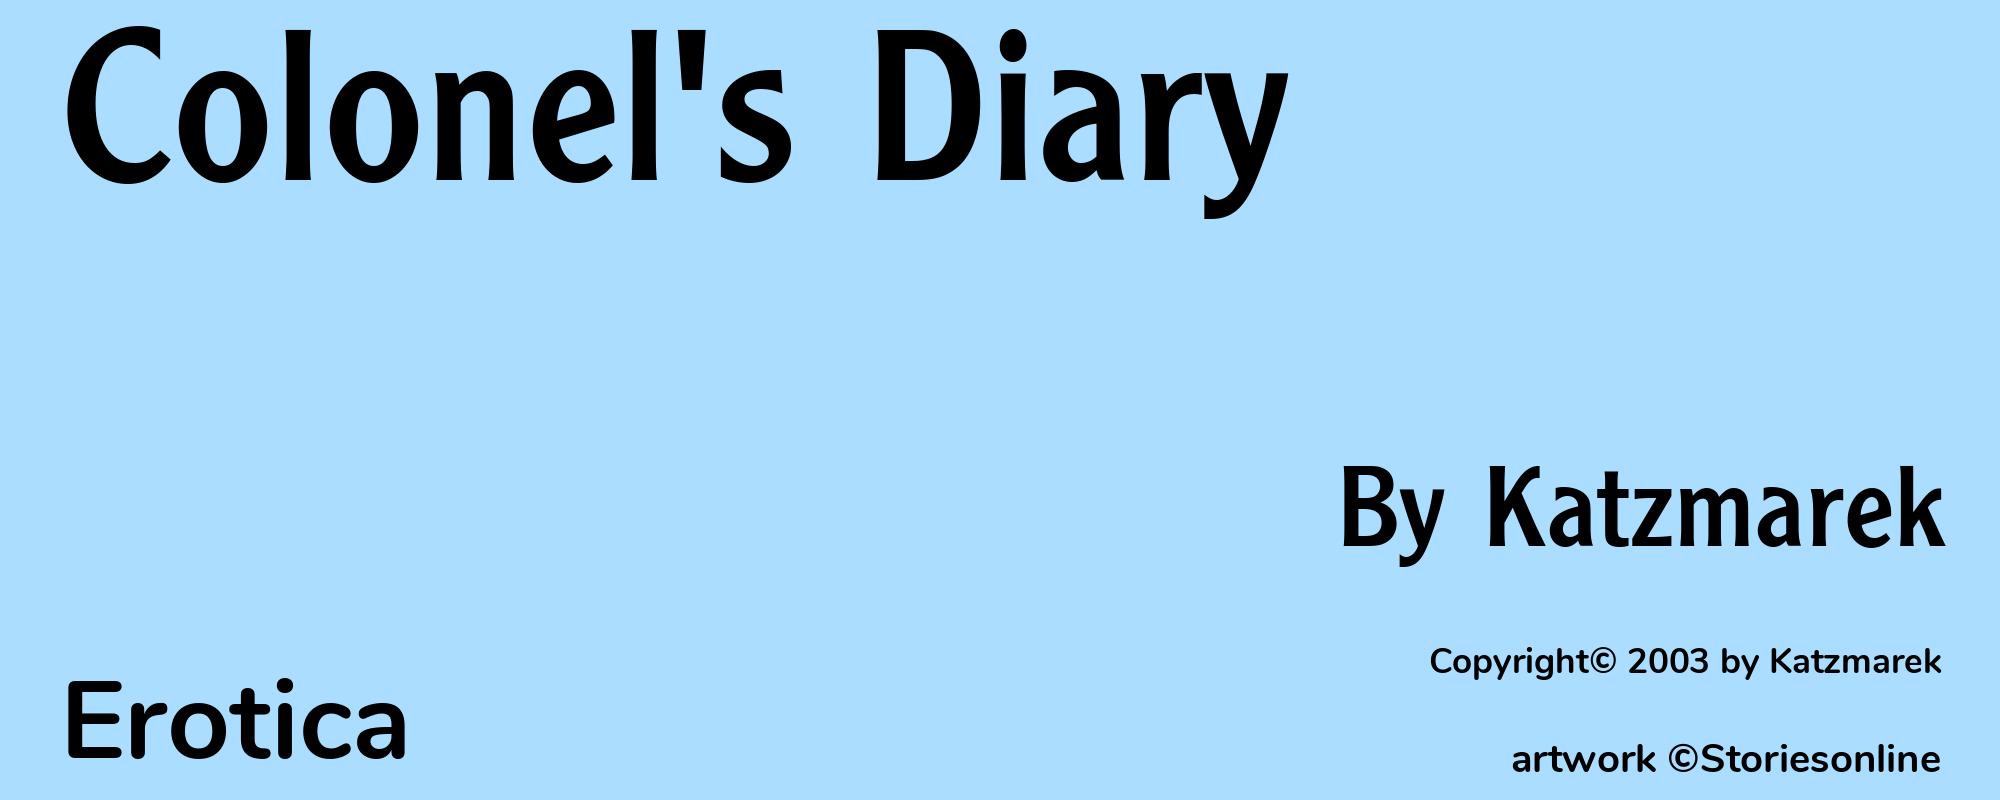 Colonel's Diary - Cover